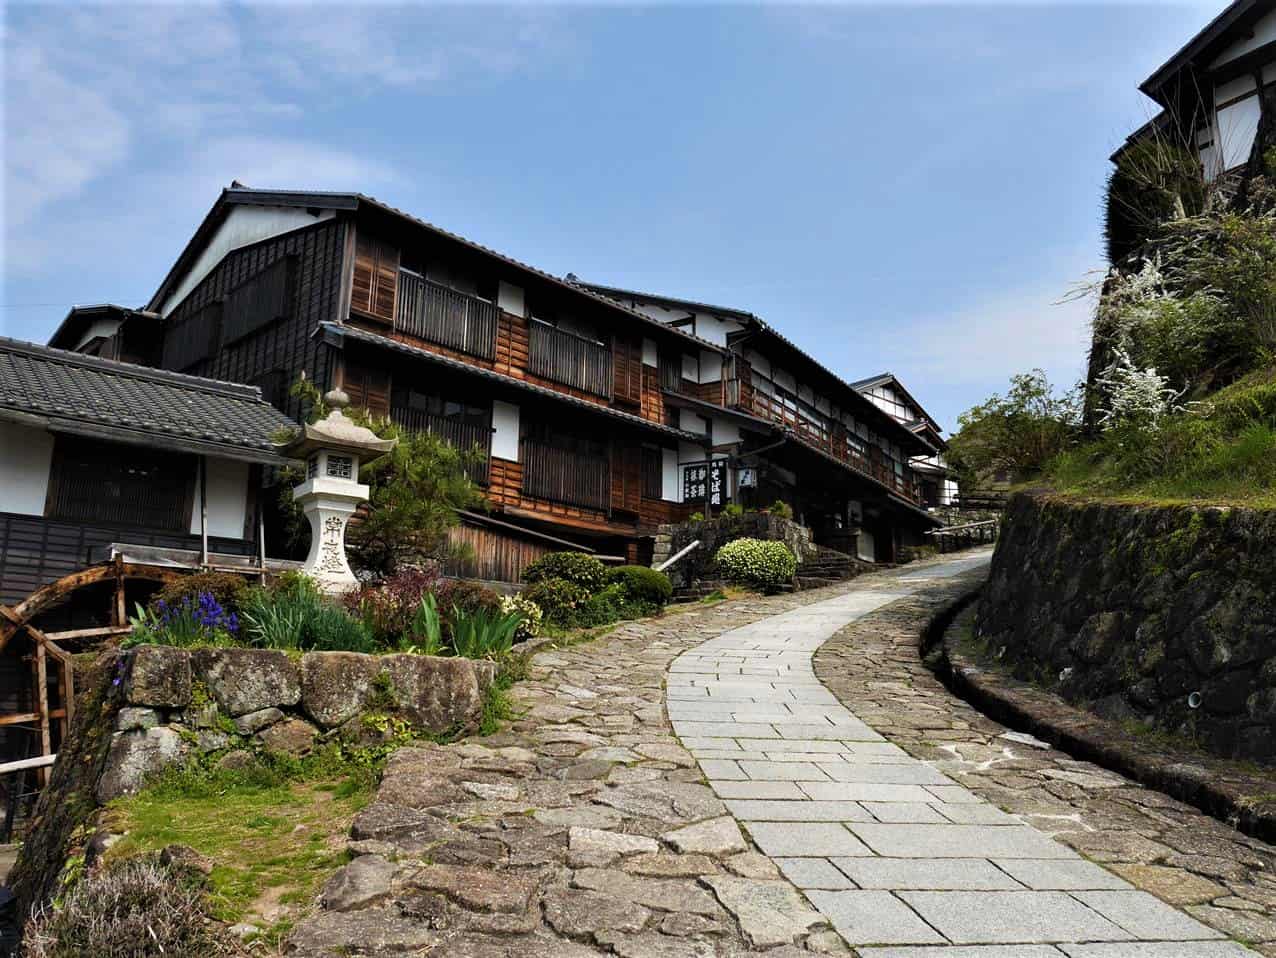 Magome-juku‚ Gifu หมู่บ้านโบราณญี่ปุ่น